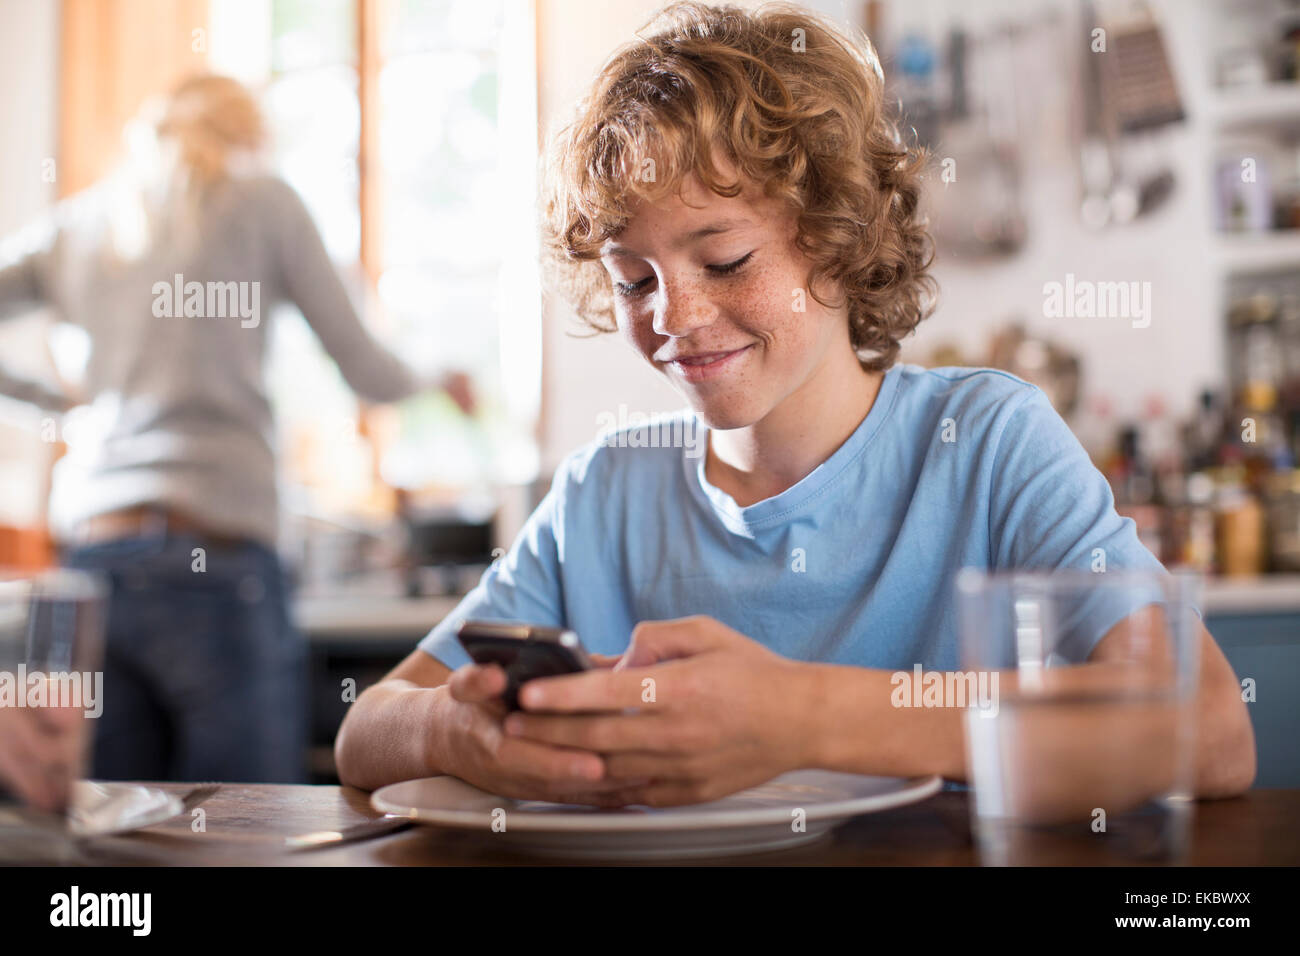 Teenage boy using smartphone à table à manger Banque D'Images